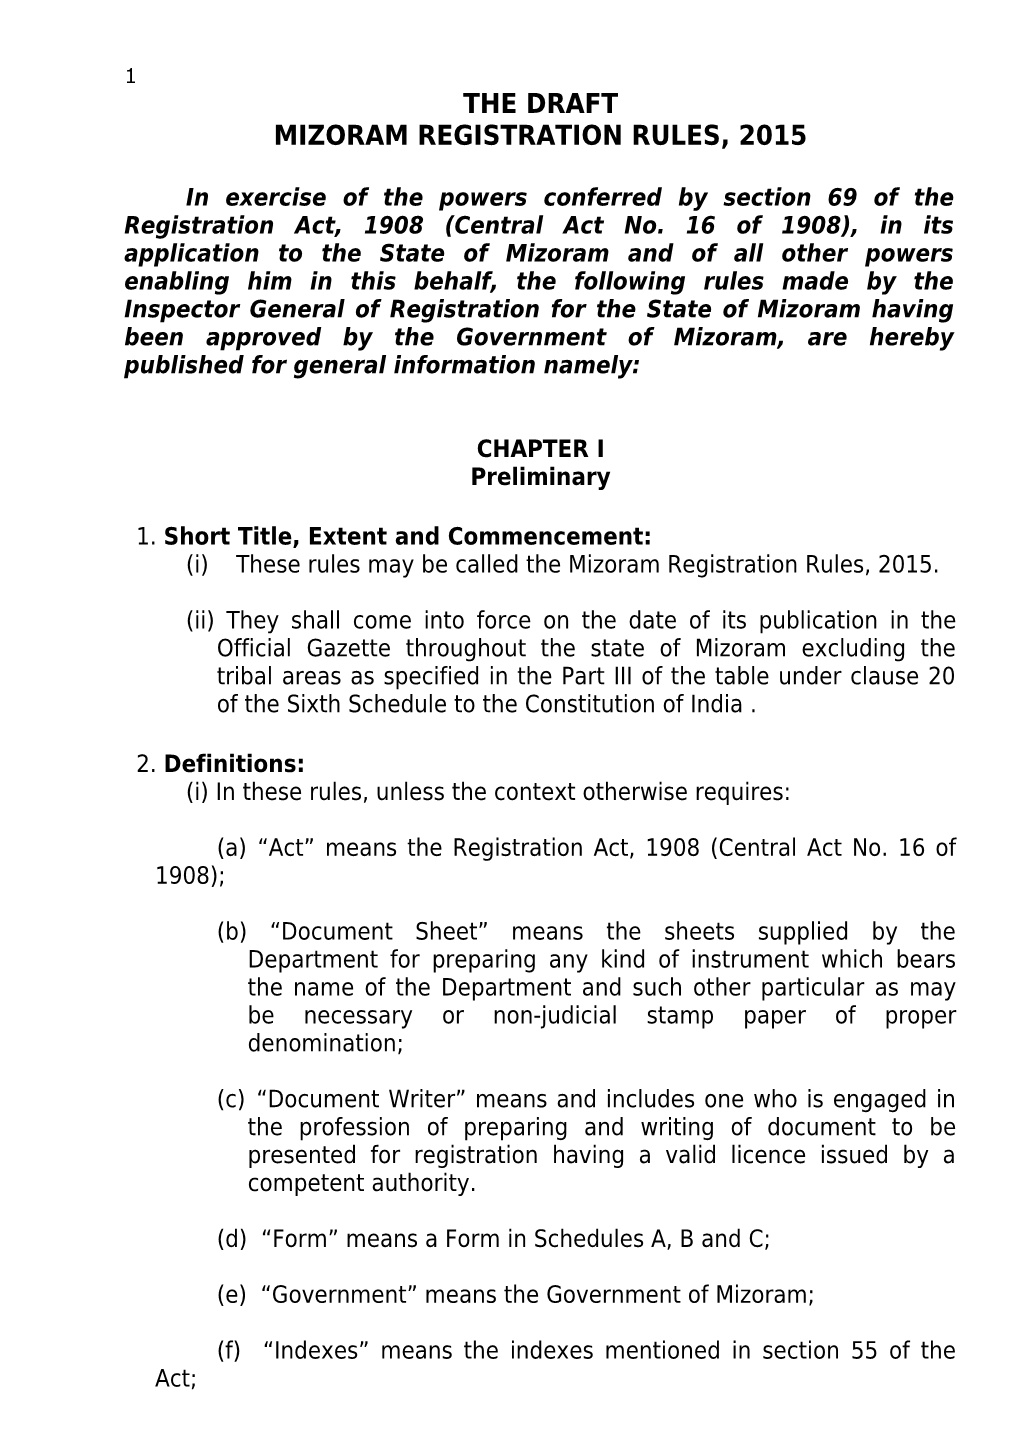 Mizoram Registration Rules, 2015